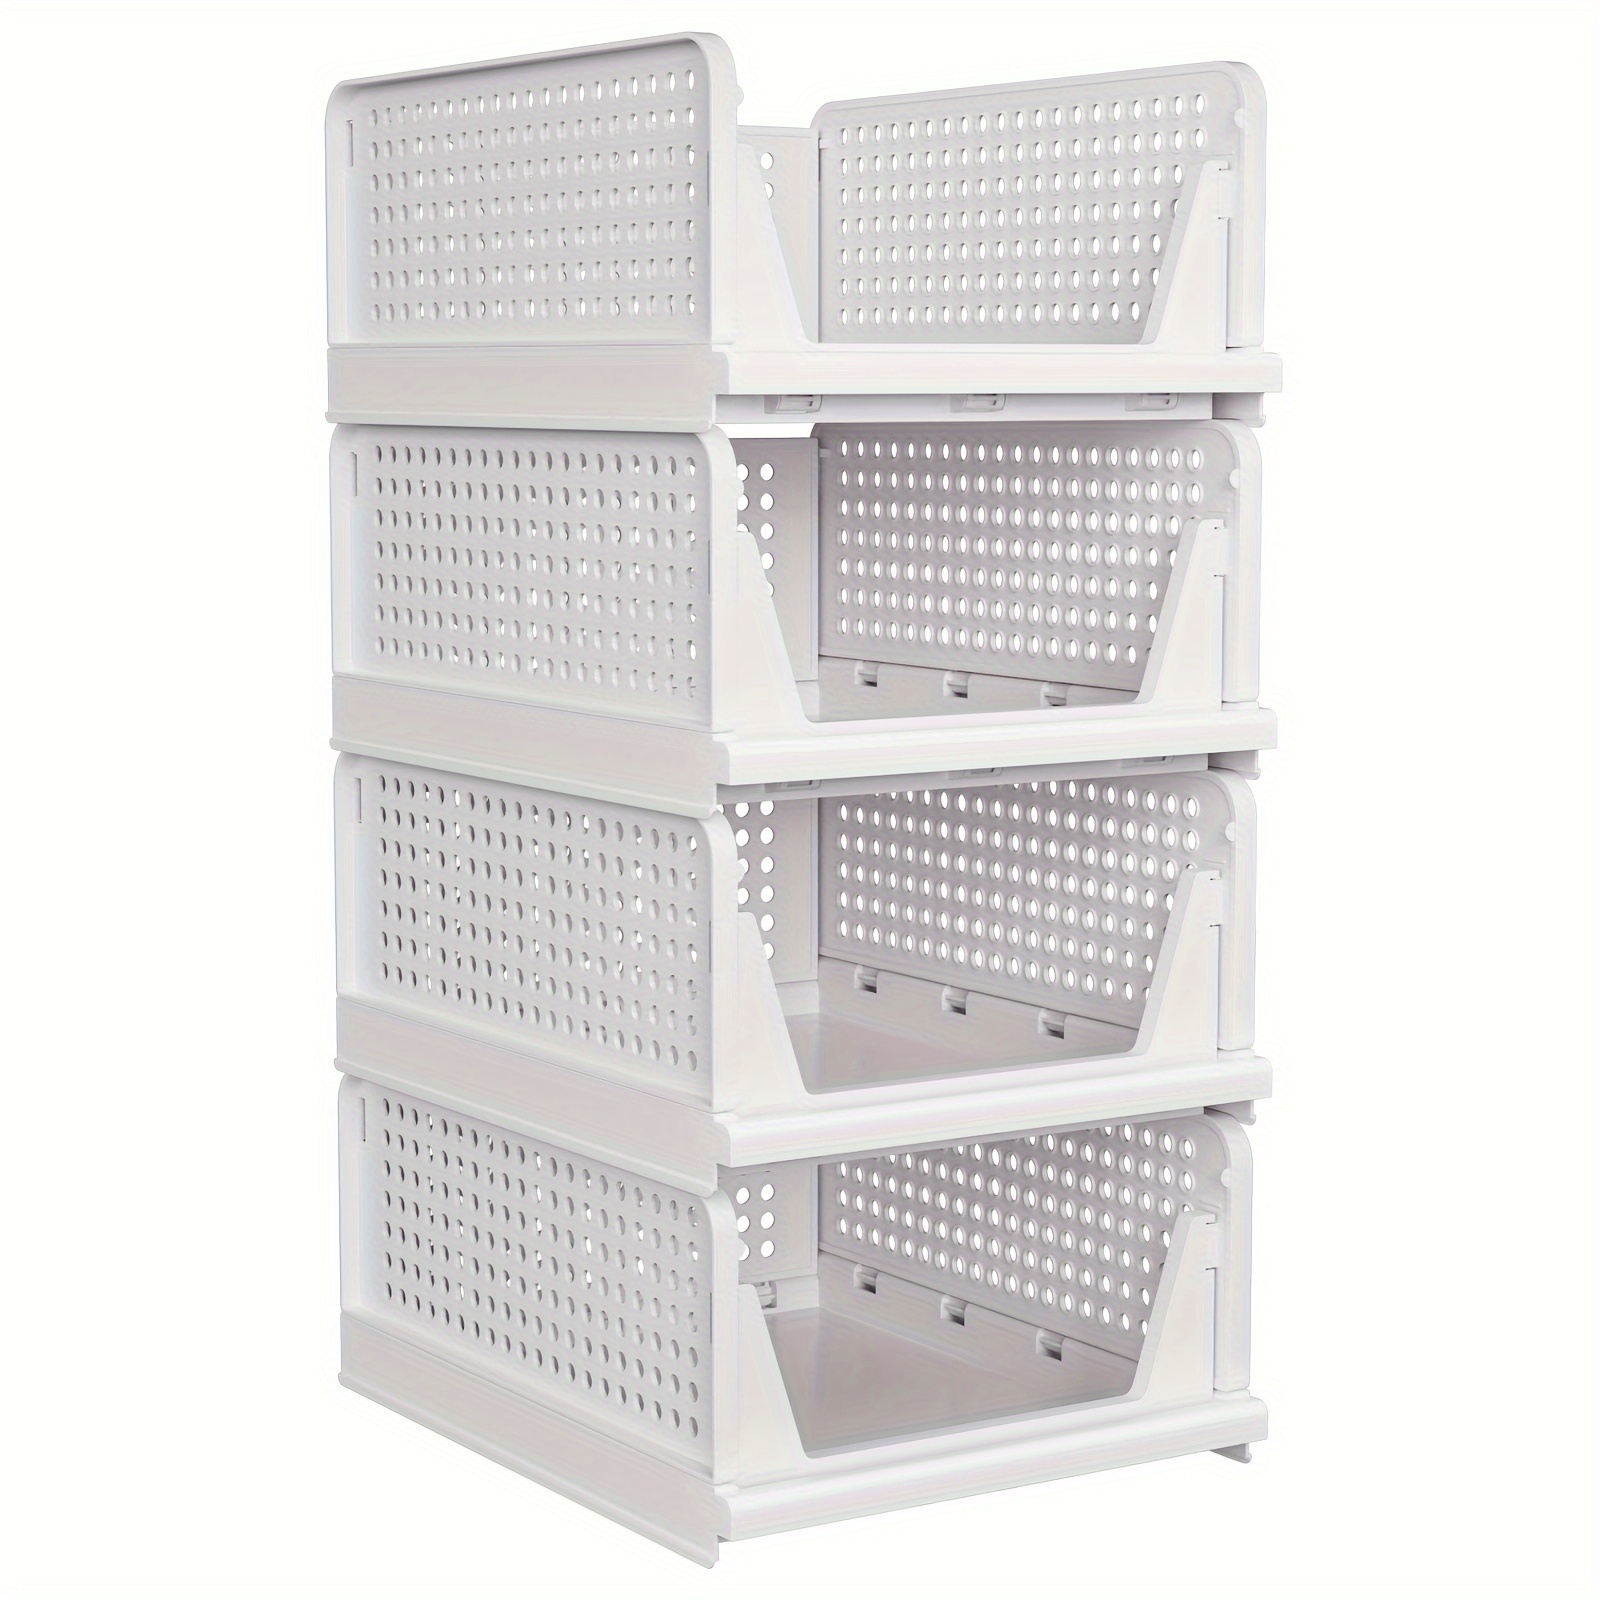 2PC Stackable Drawer Organizer Divider Closet Storage Box for